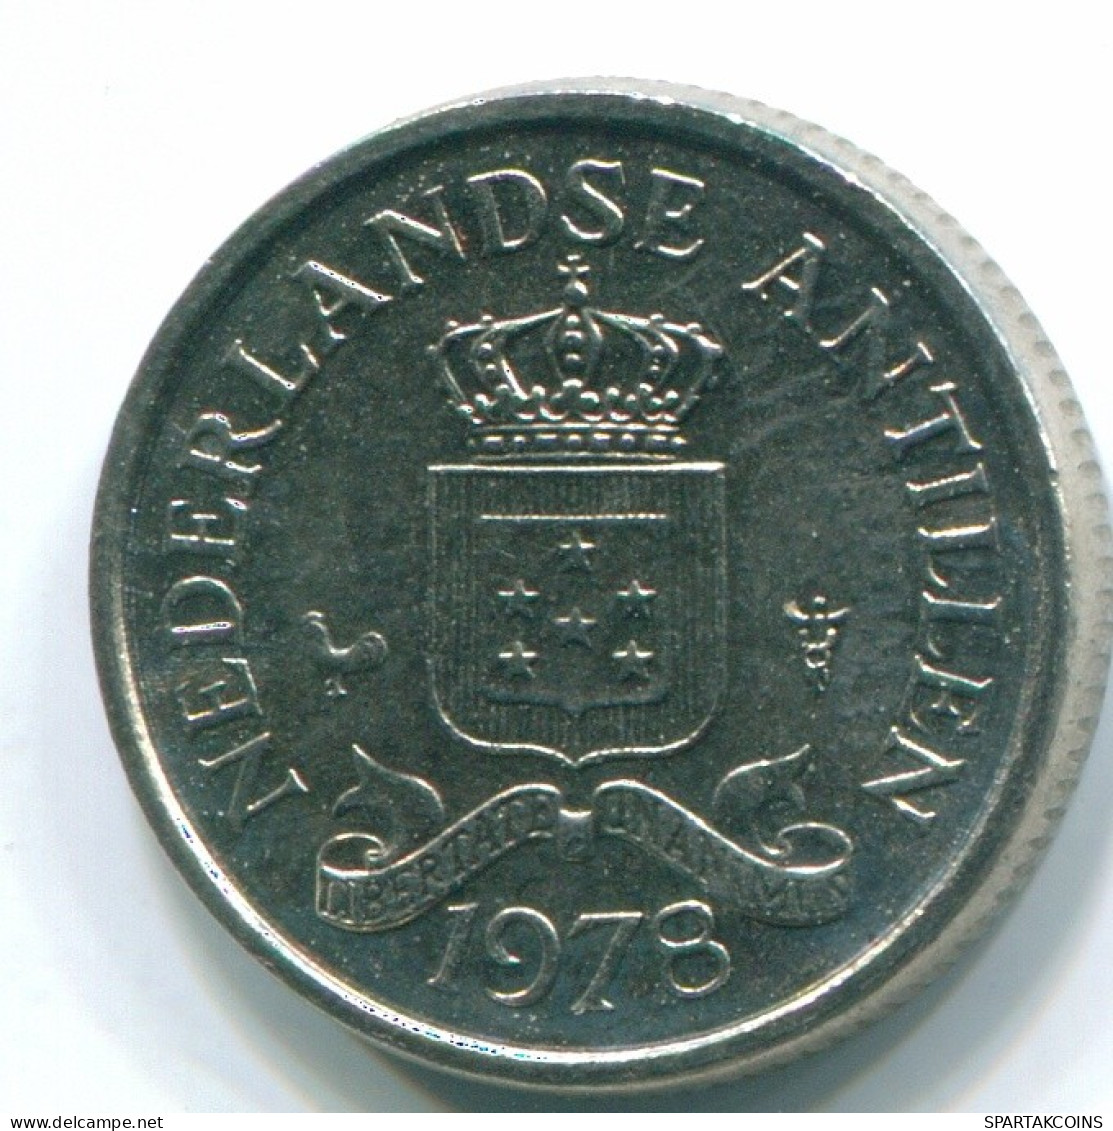 10 CENTS 1978 NIEDERLÄNDISCHE ANTILLEN Nickel Koloniale Münze #S13574.D.A - Netherlands Antilles